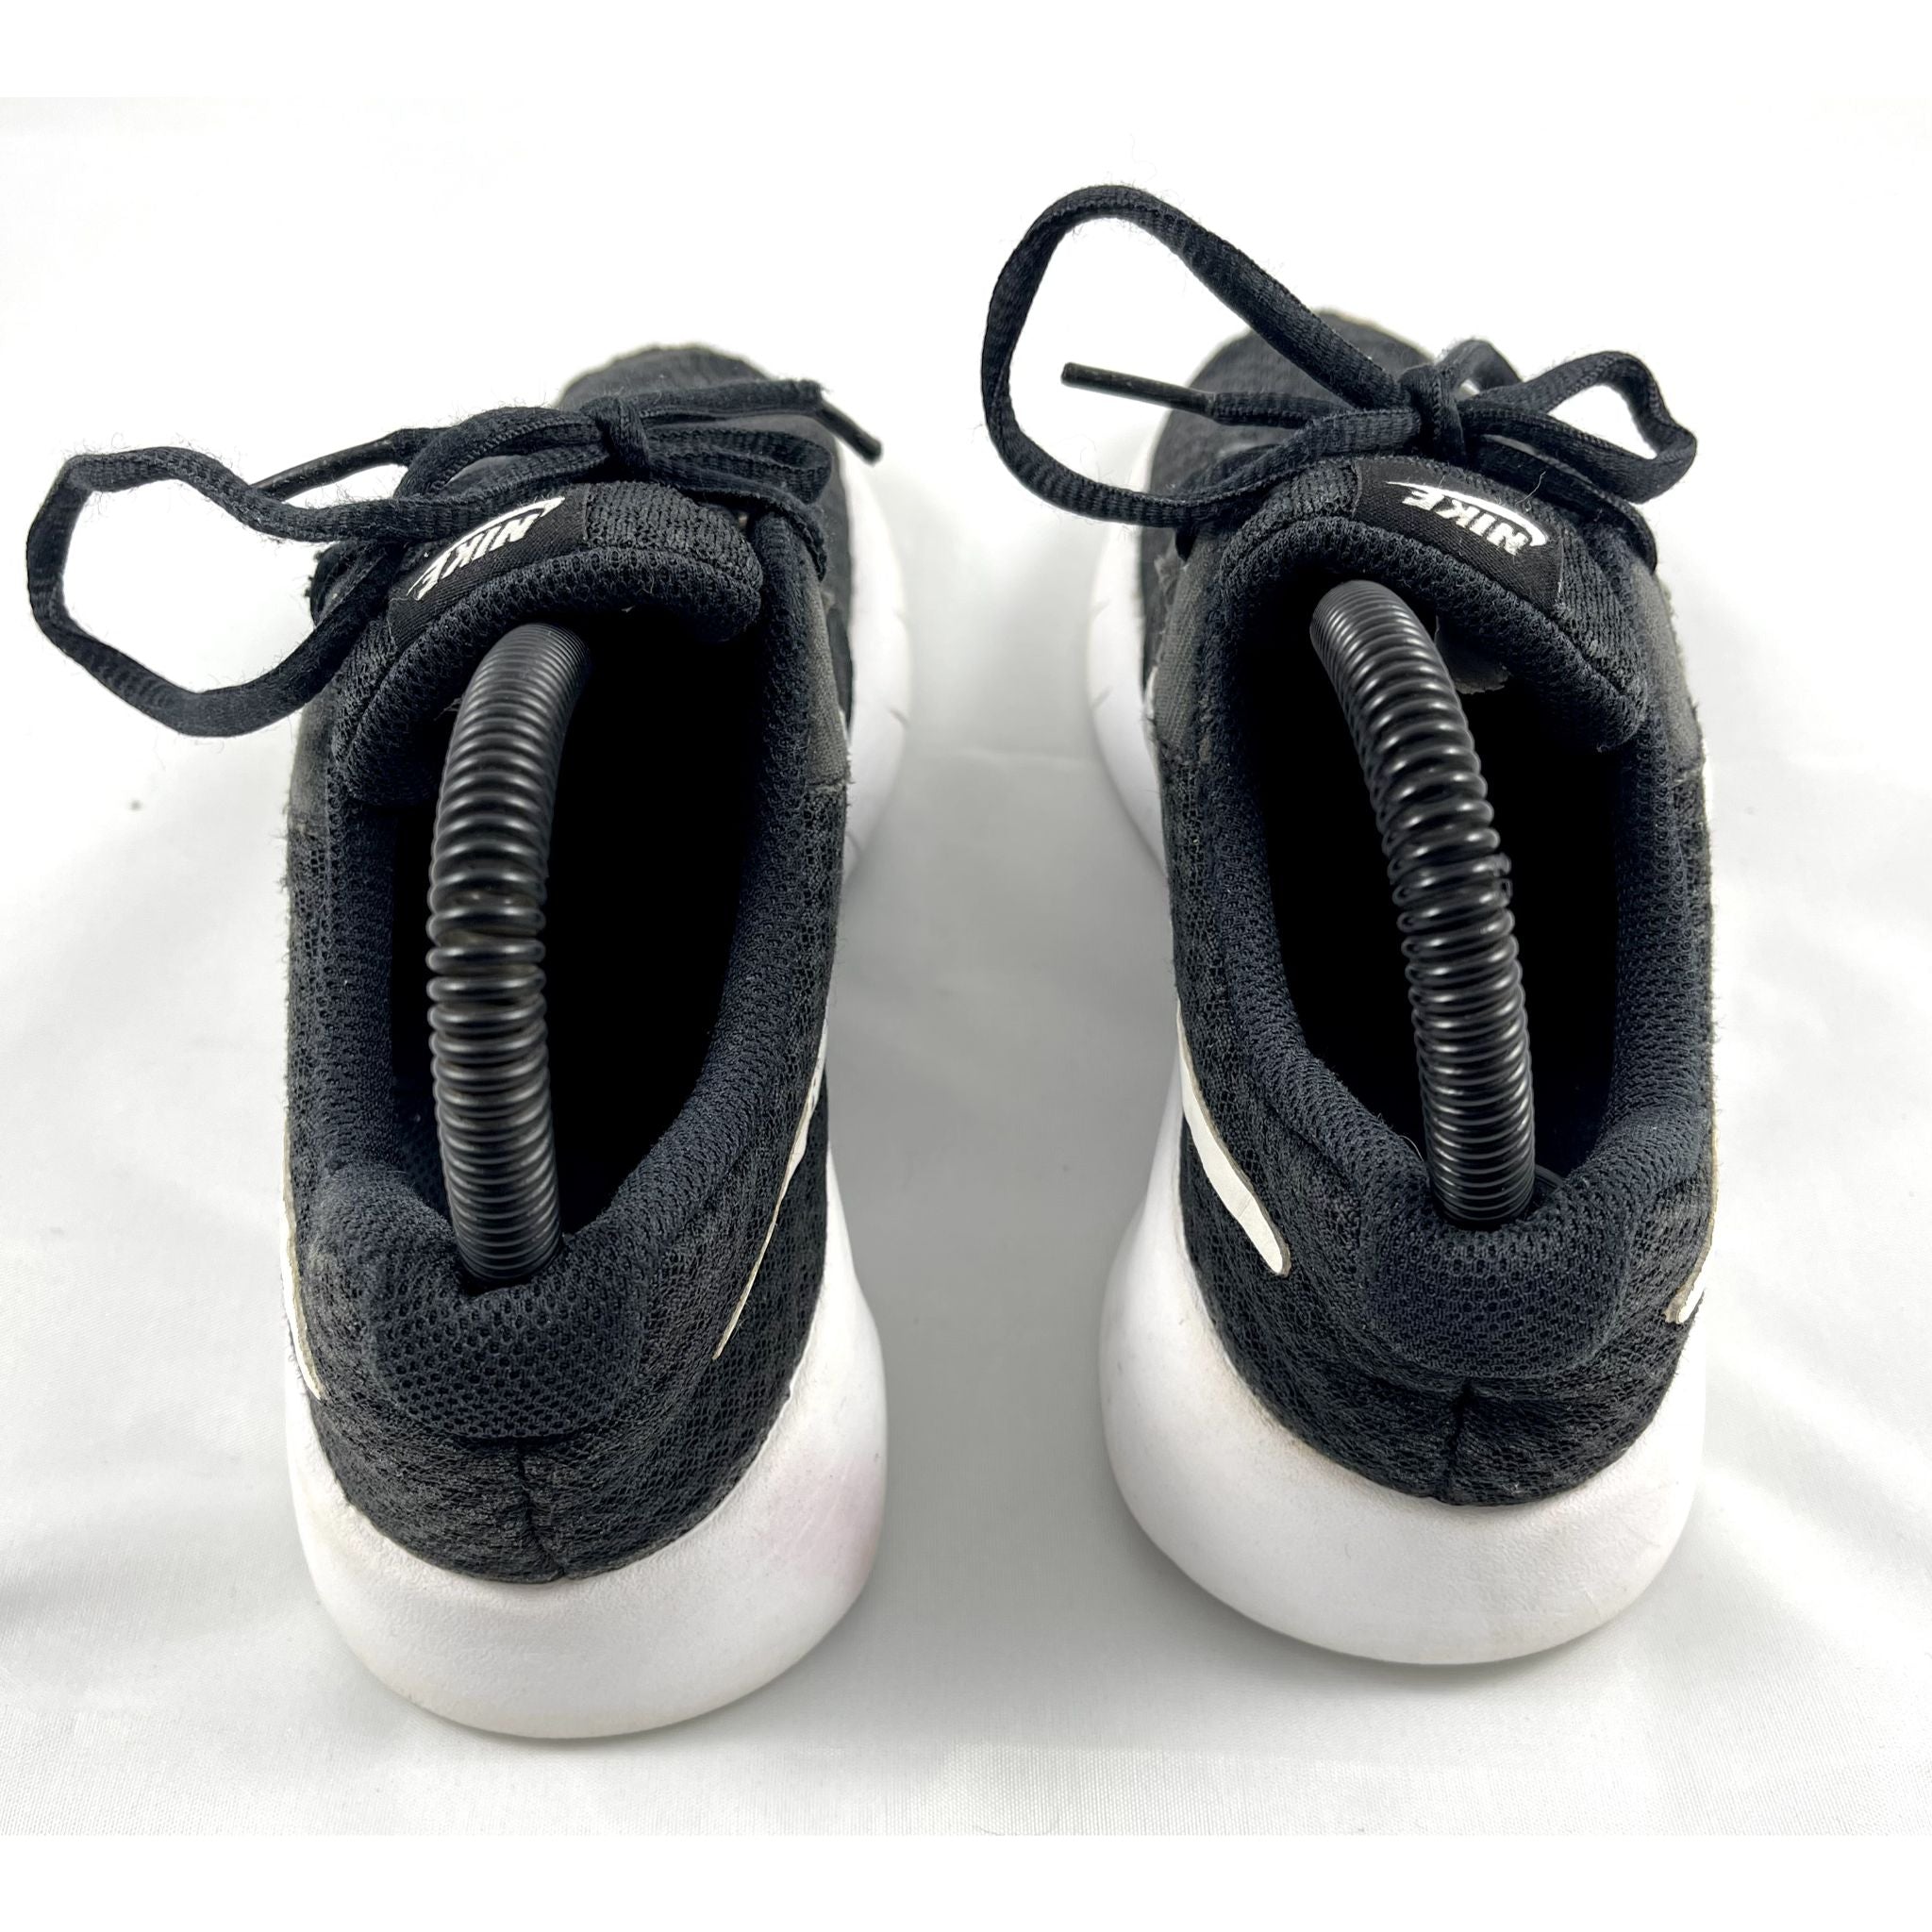 Nike Black Running Shoes Online